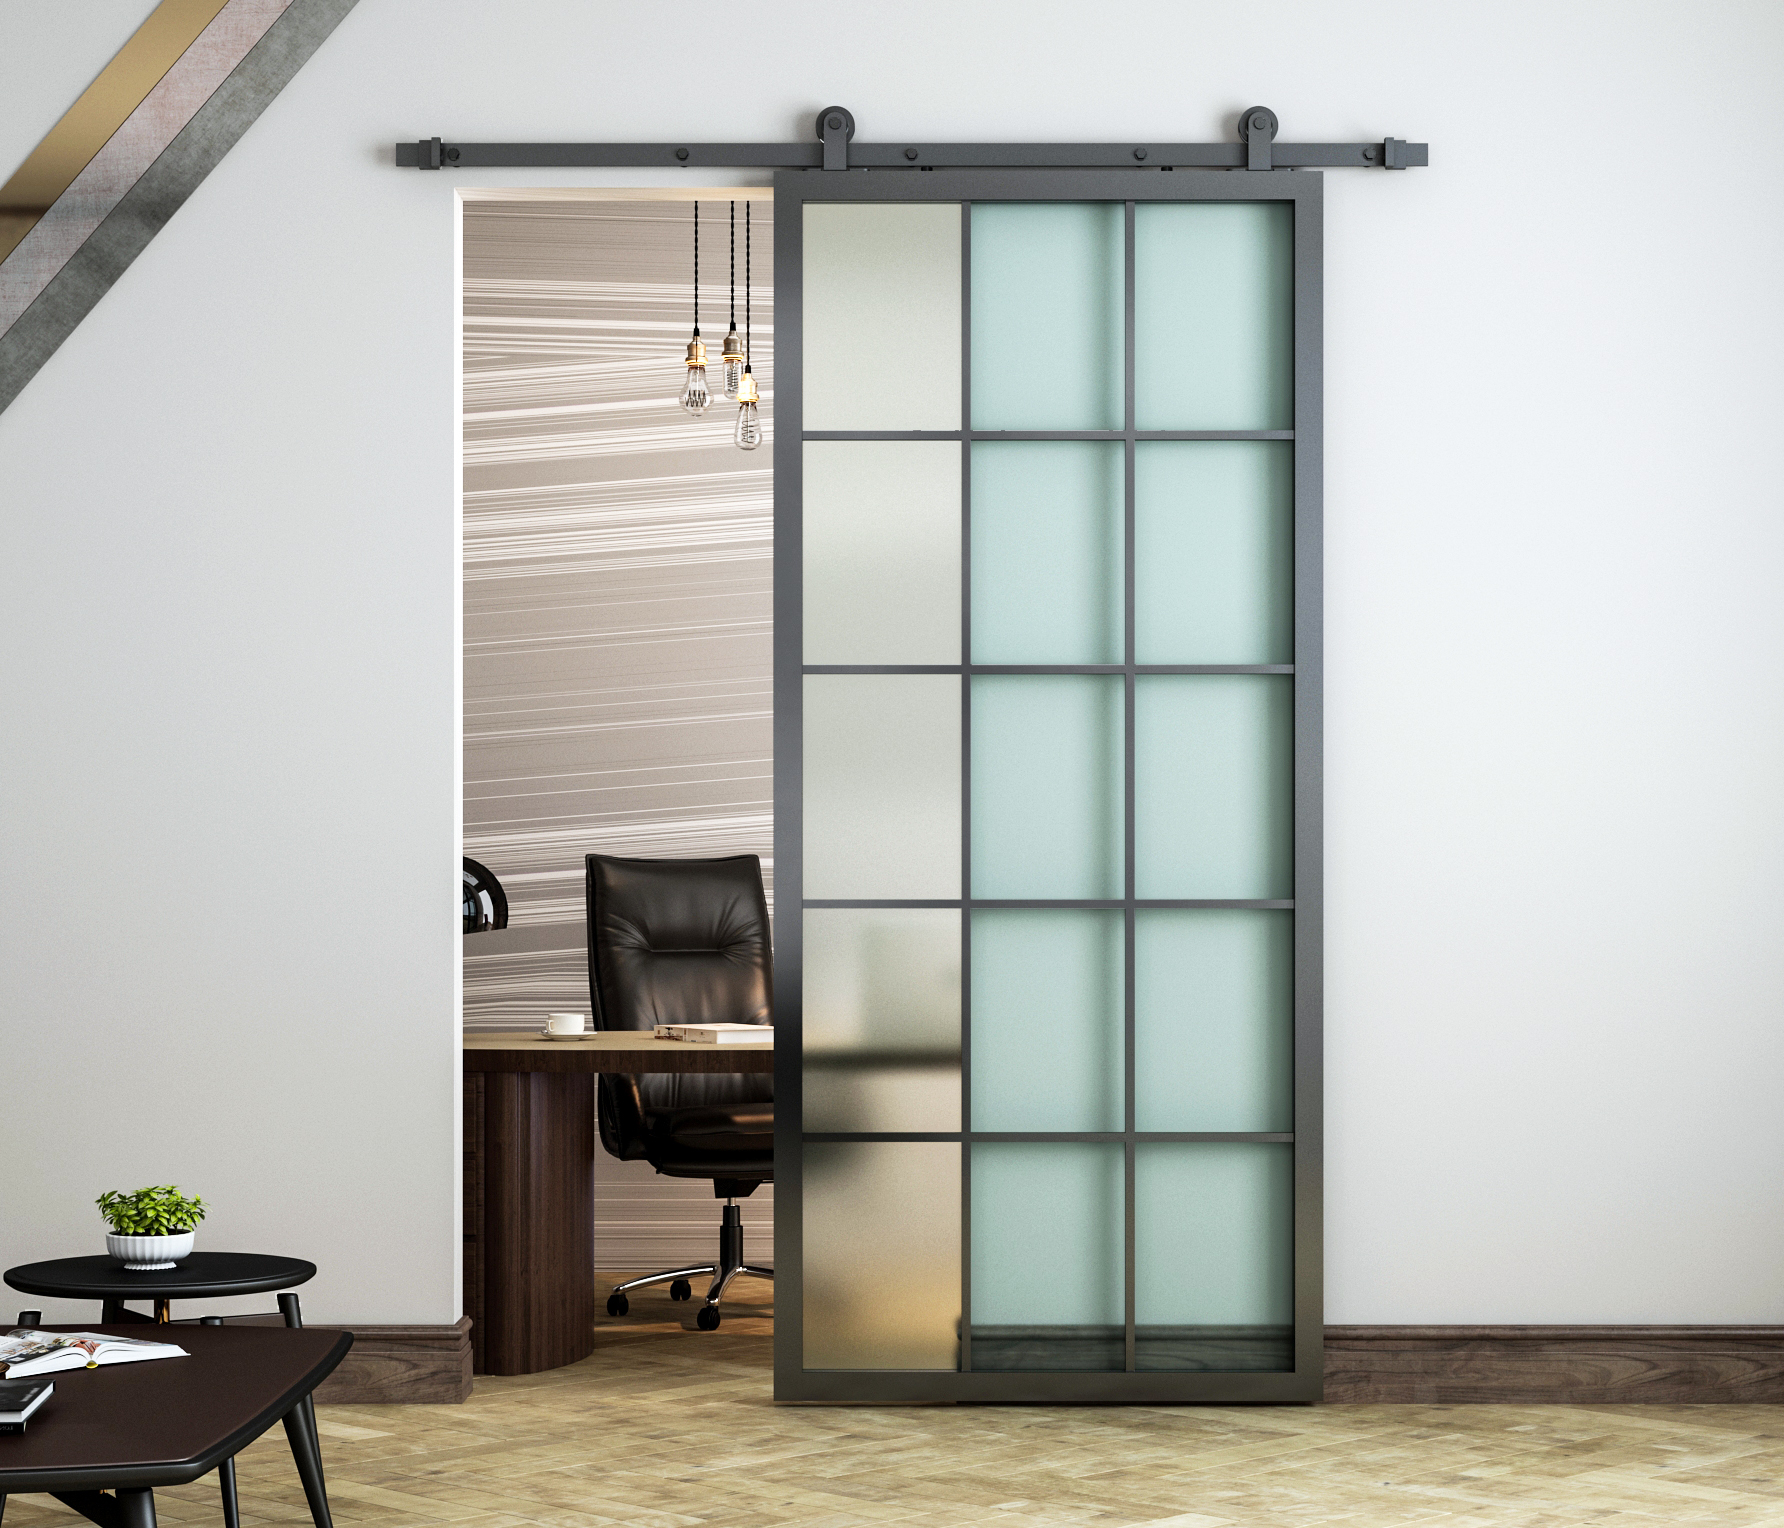 

DIYHD 36x84" Black Aluminum Frame Glass Sliding Barn Door Slab Interior Clear Tempered Glass Partition Door Panel(Disassembled)